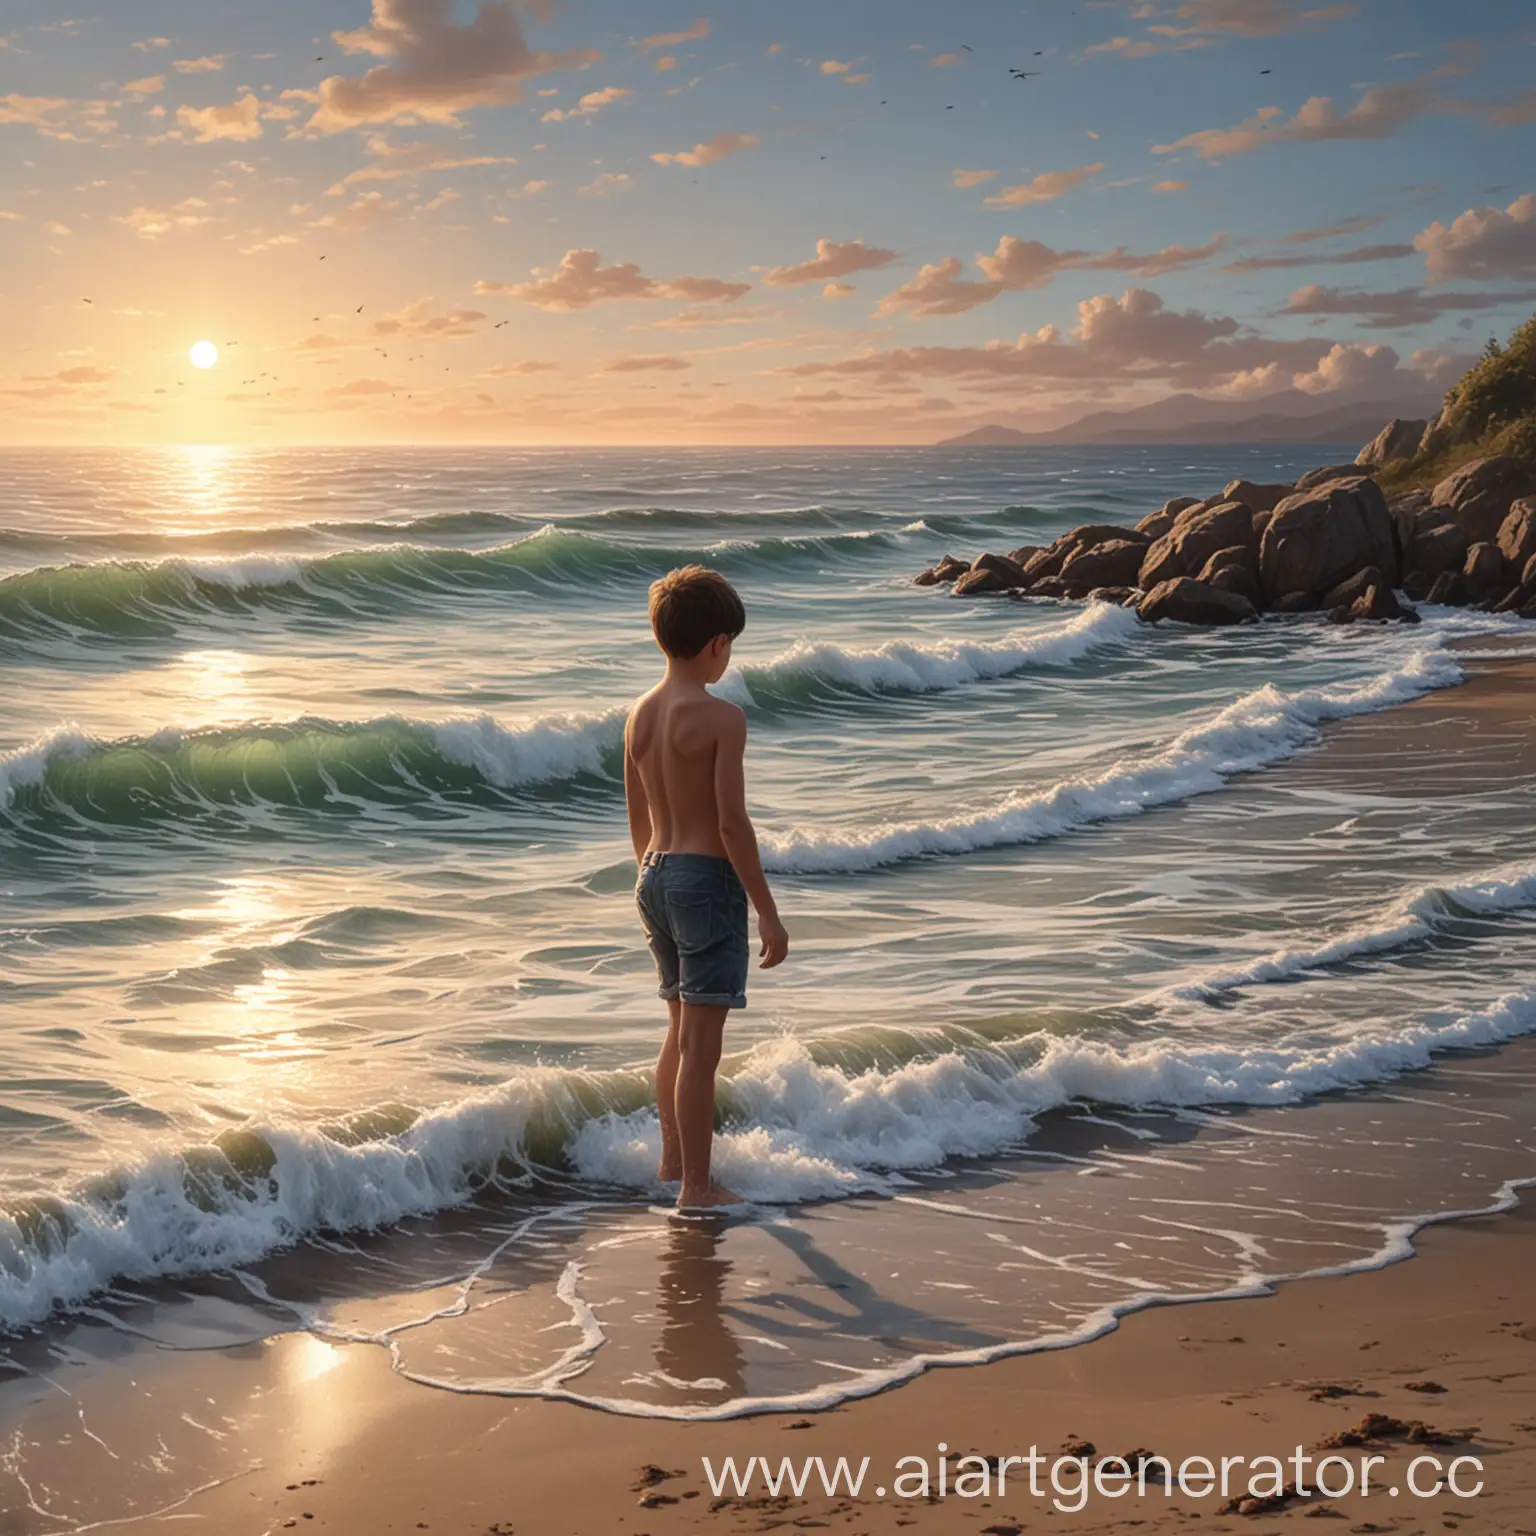 Boy-Standing-on-Ocean-Shore-at-Sunset